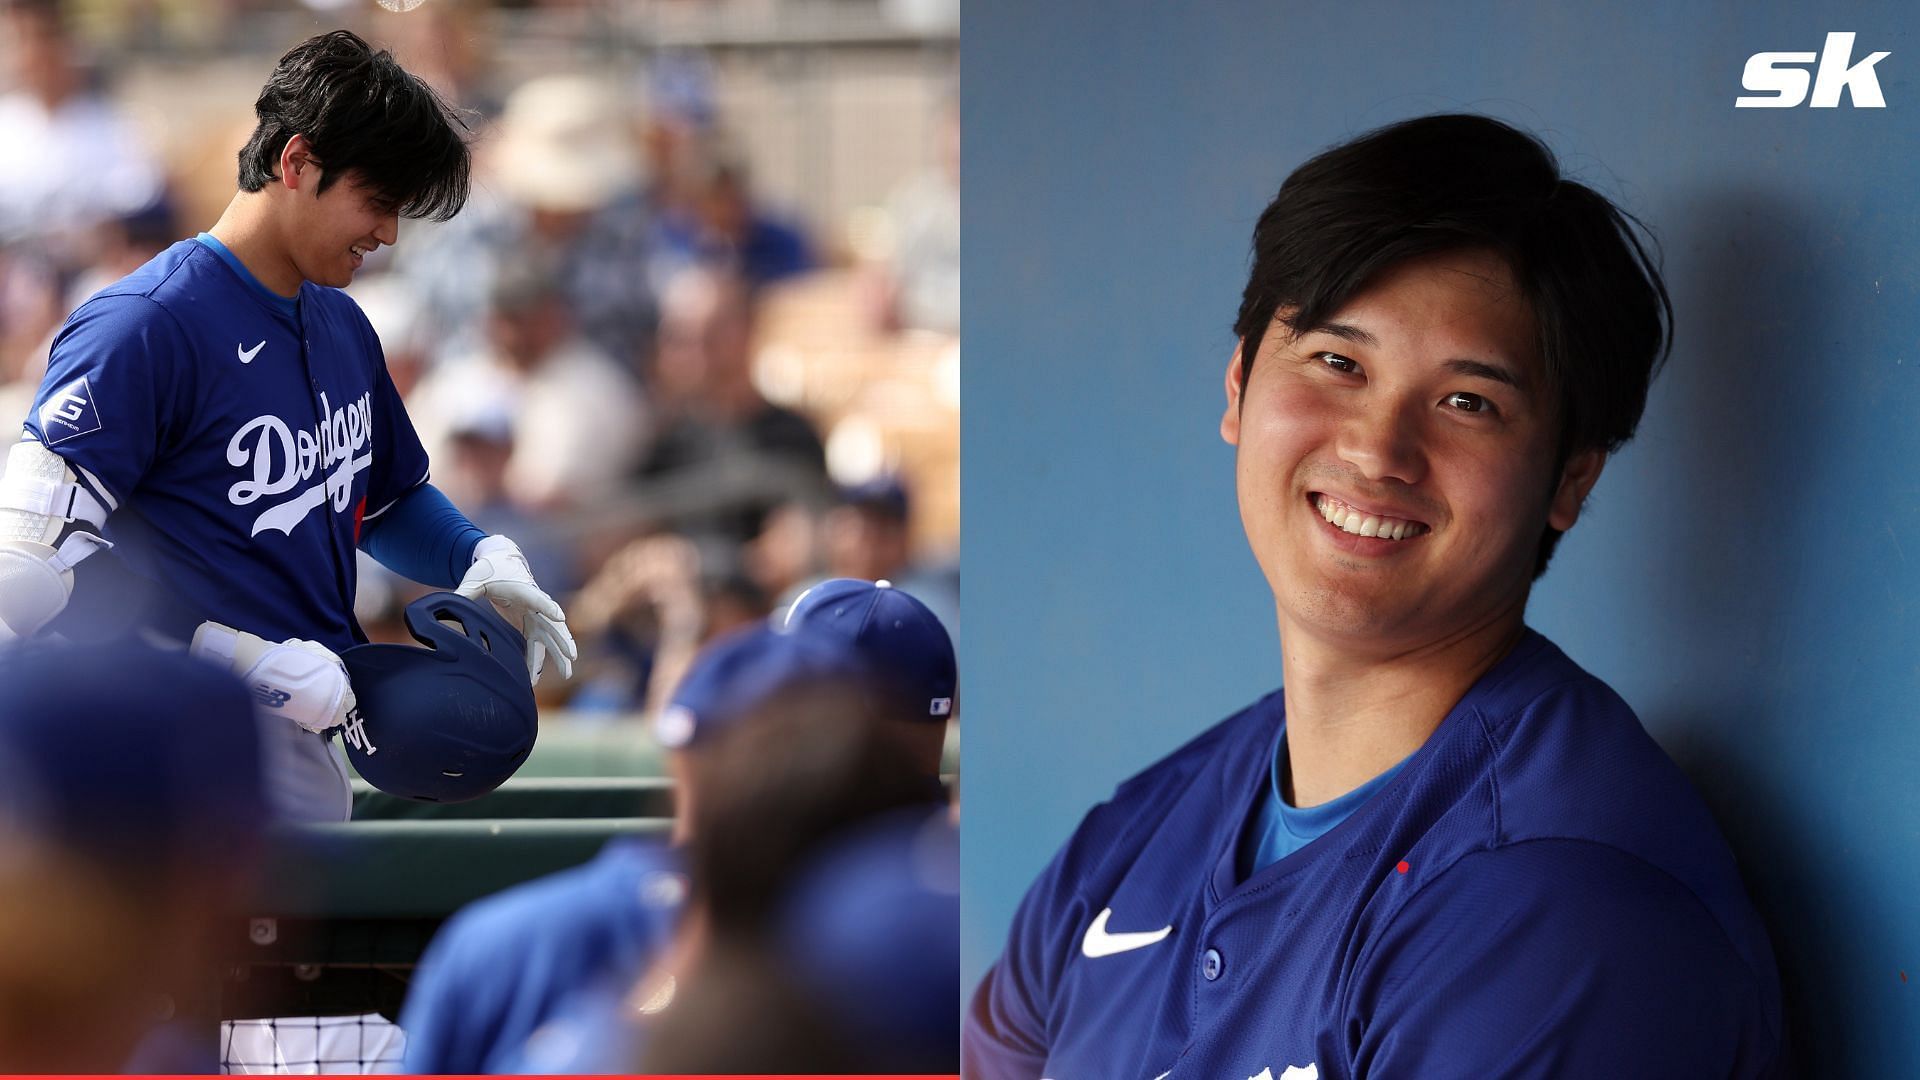 Shohei Ohtani is already impressing the Dodgers